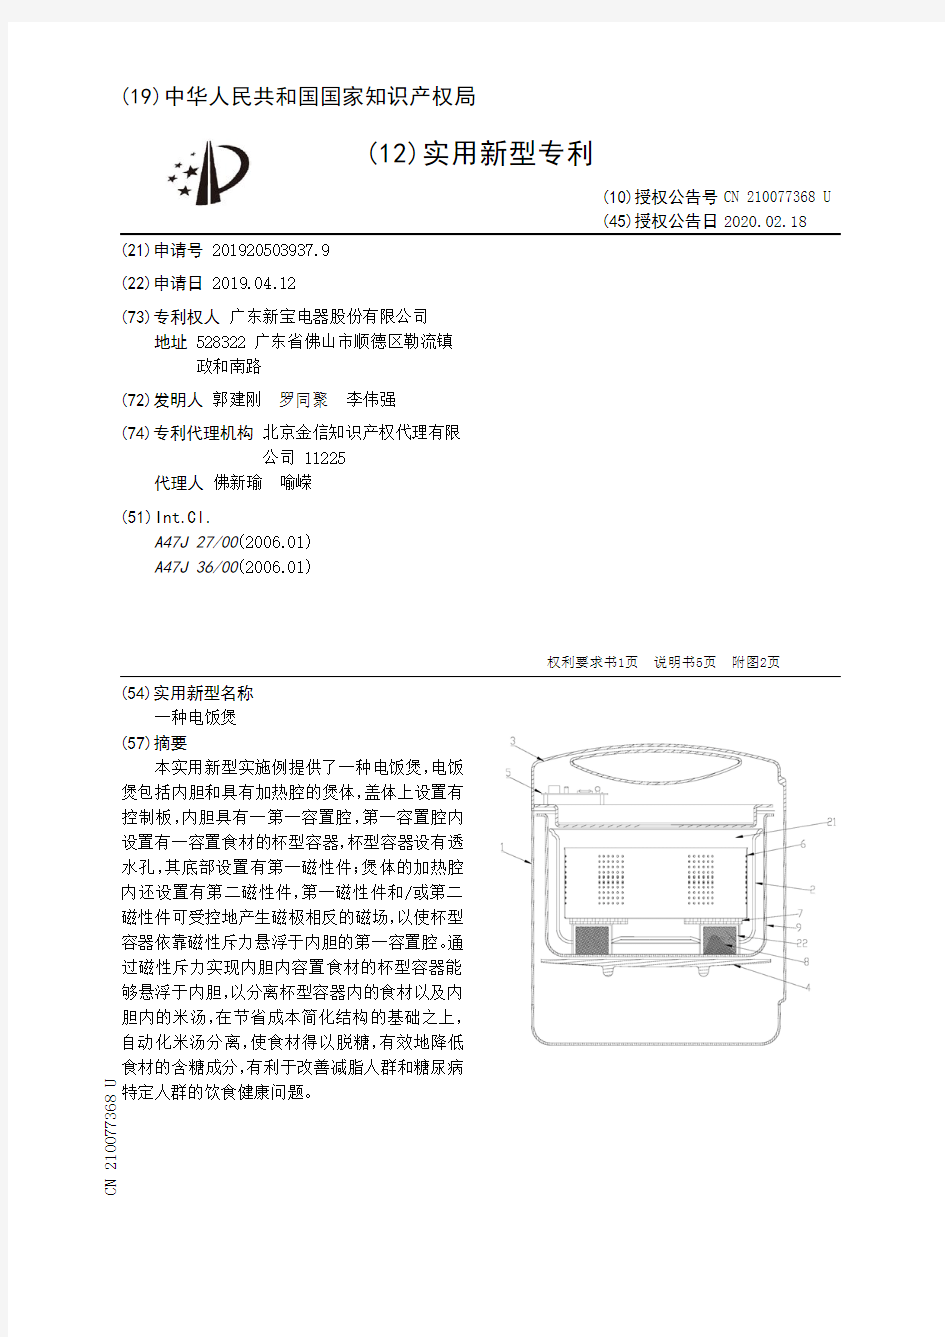 【CN210077368U】一种电饭煲【专利】